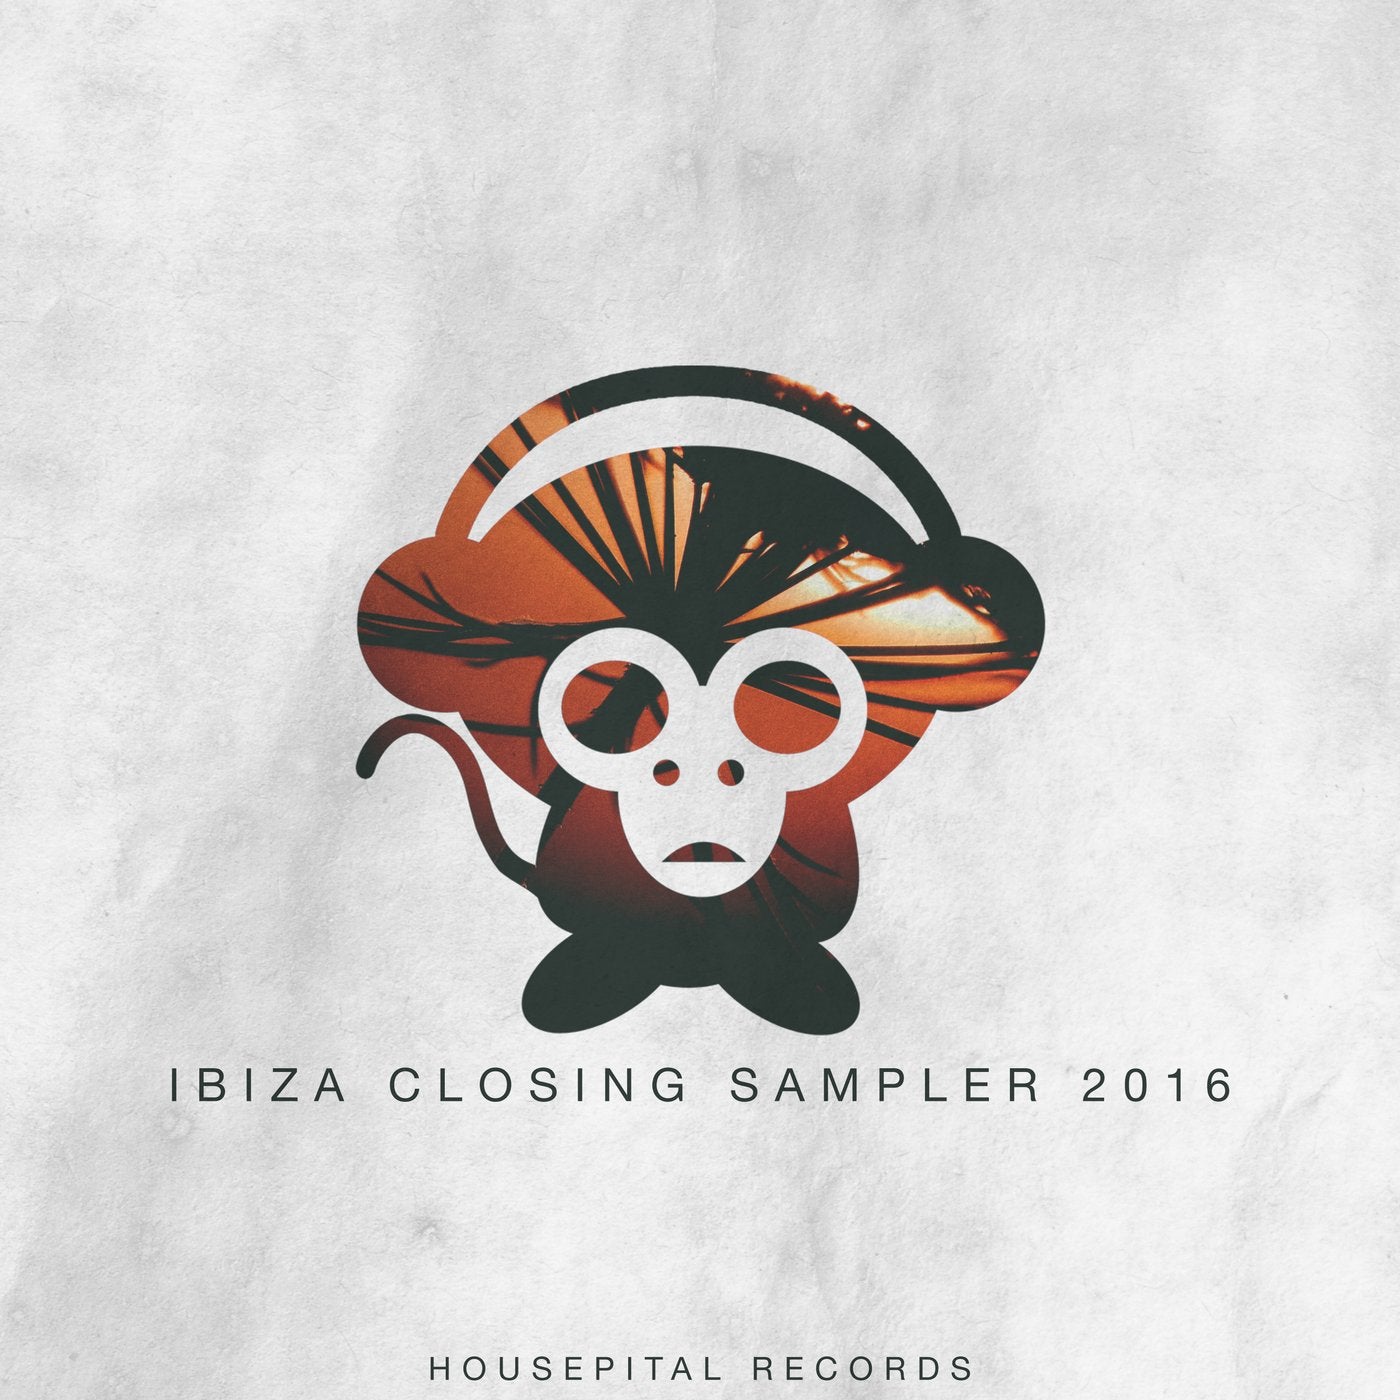 Ibiza Closing Sampler 2016